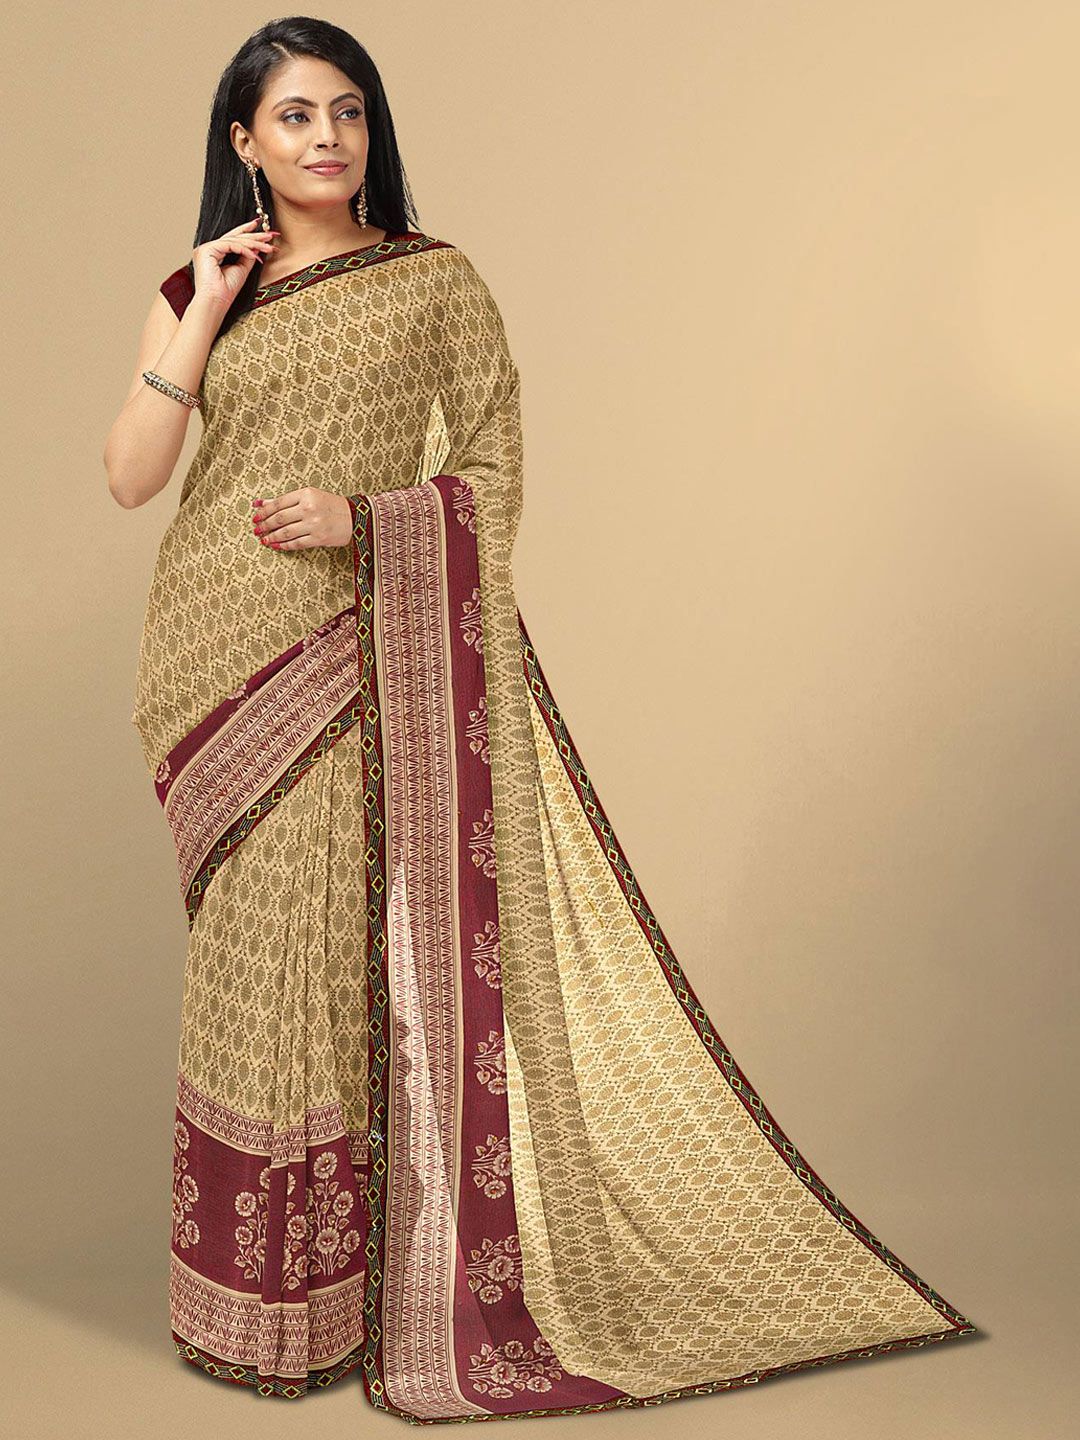 Kalamandir Beige & Maroon Ethnic Motifs Silk Blend Saree Price in India